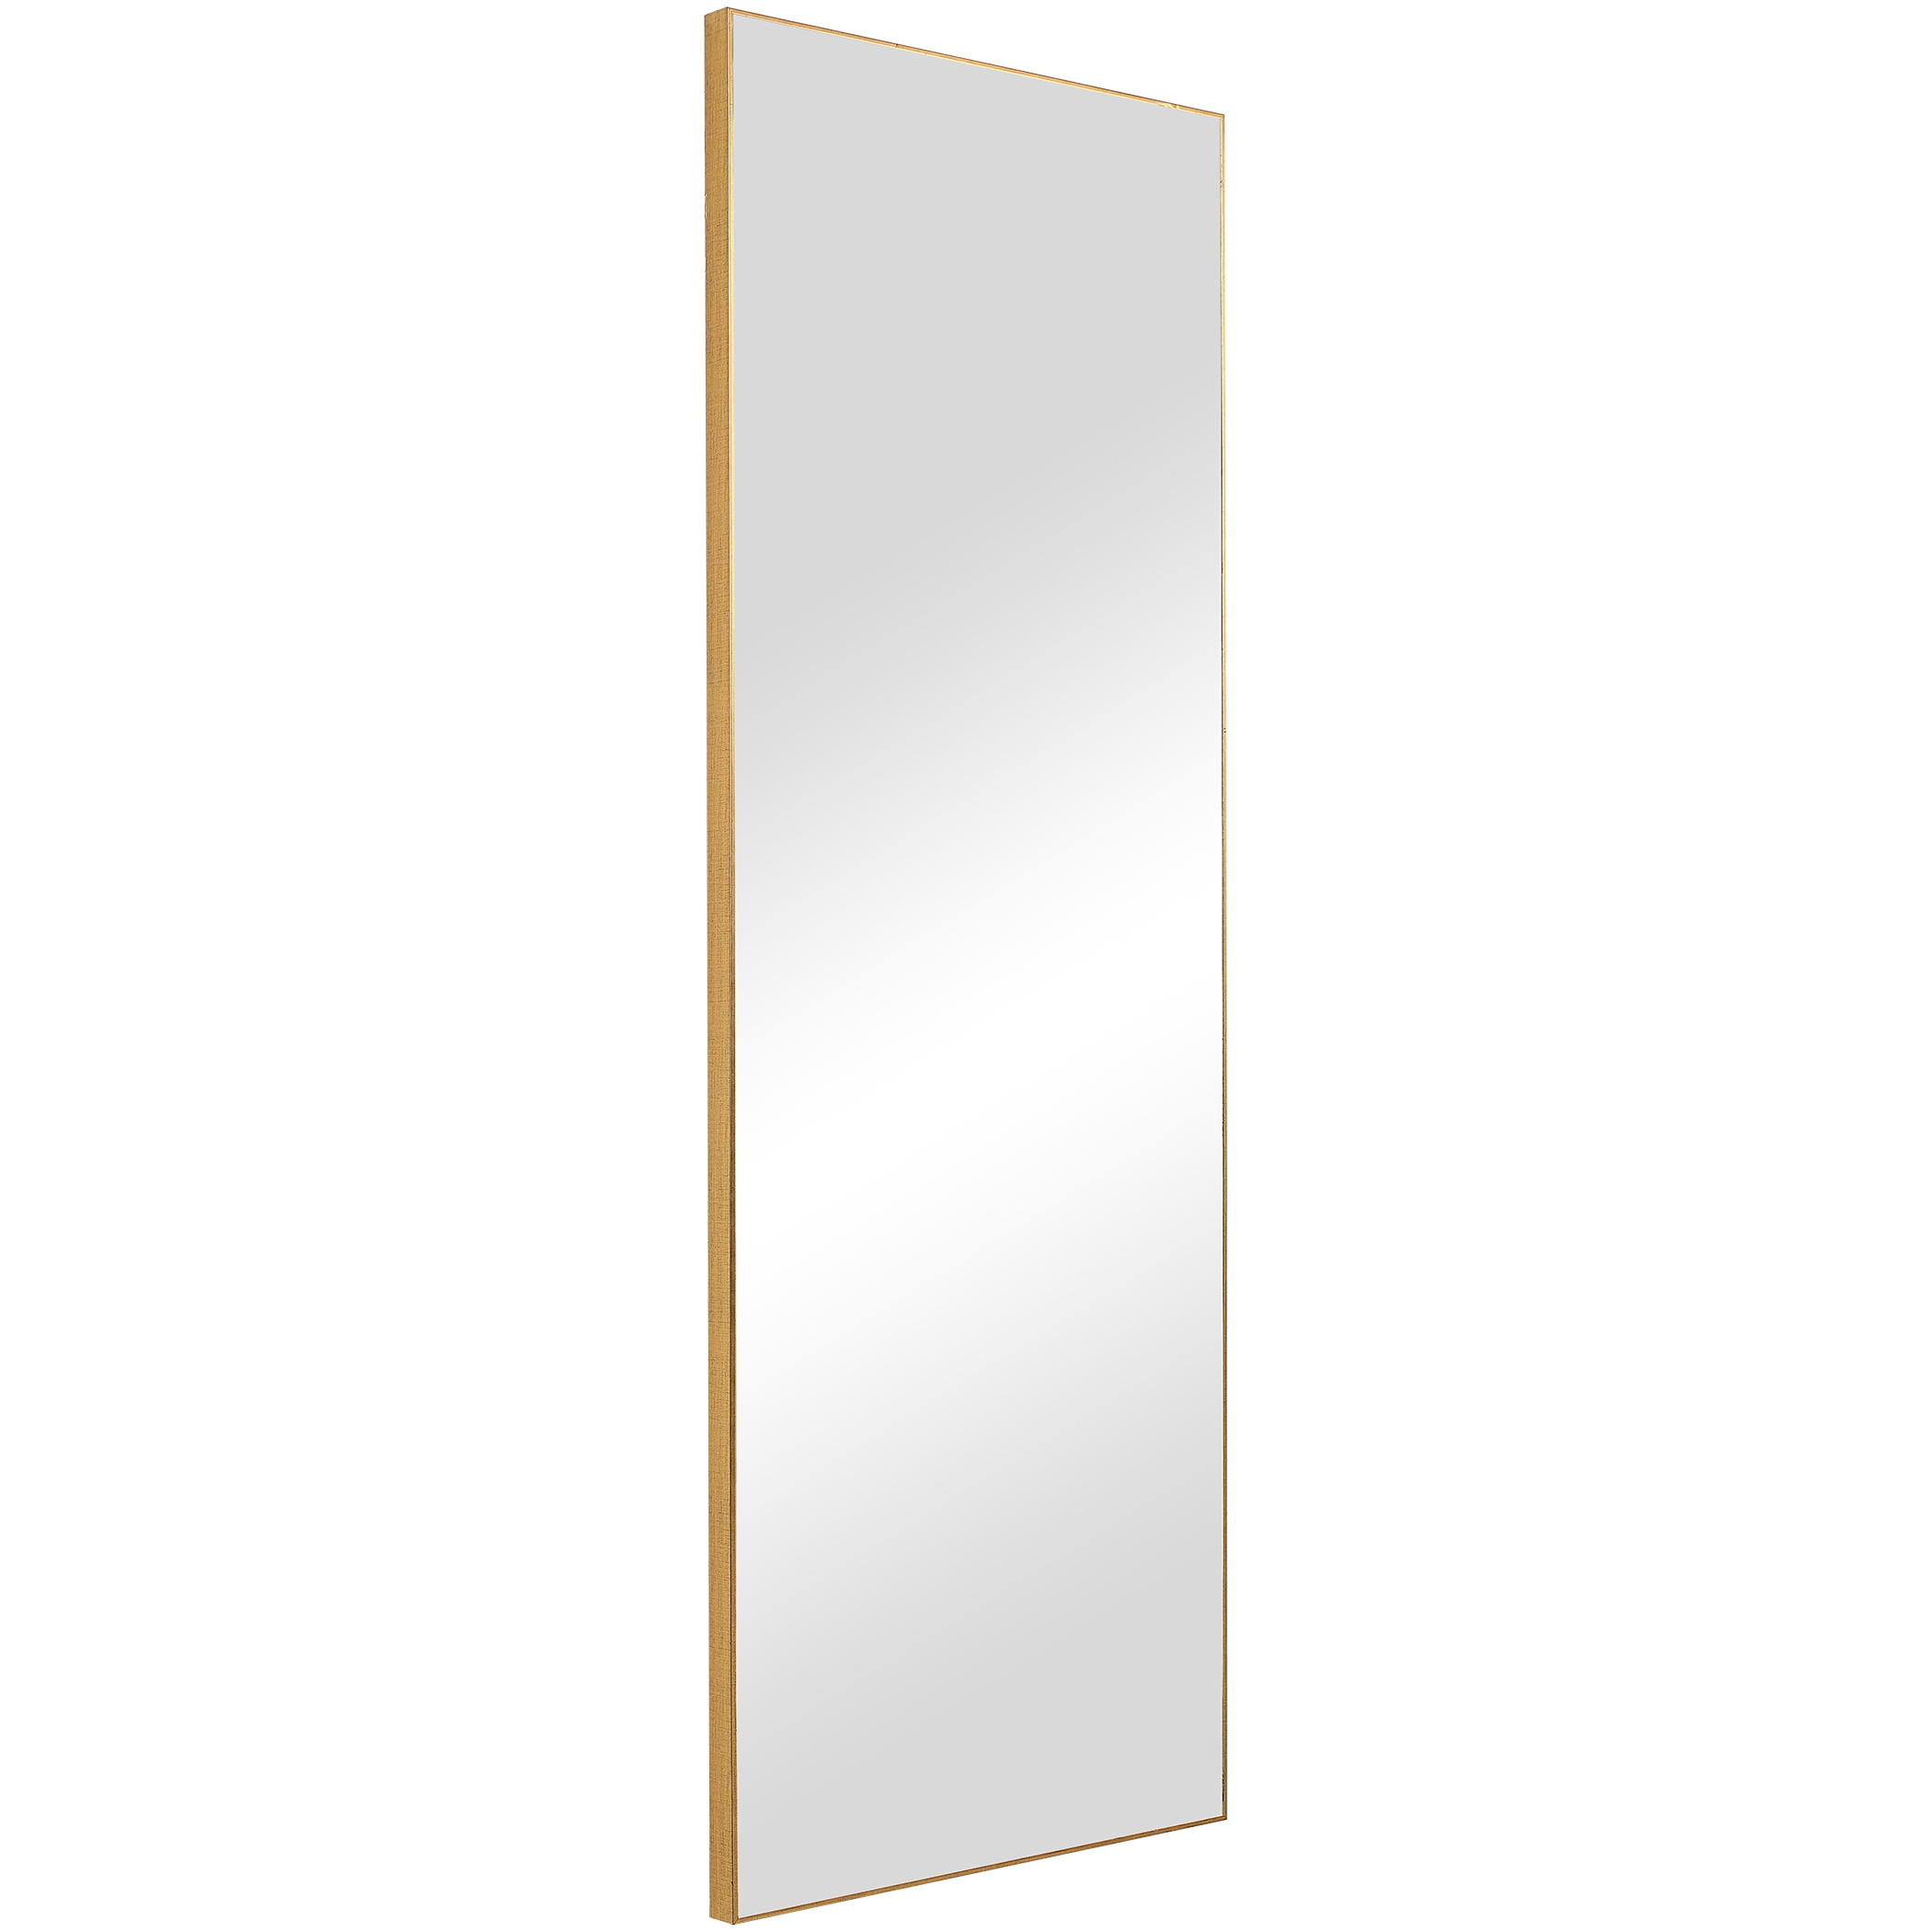 19.53" x 59.53" Thin Frame Mirror, Gold - Image 5